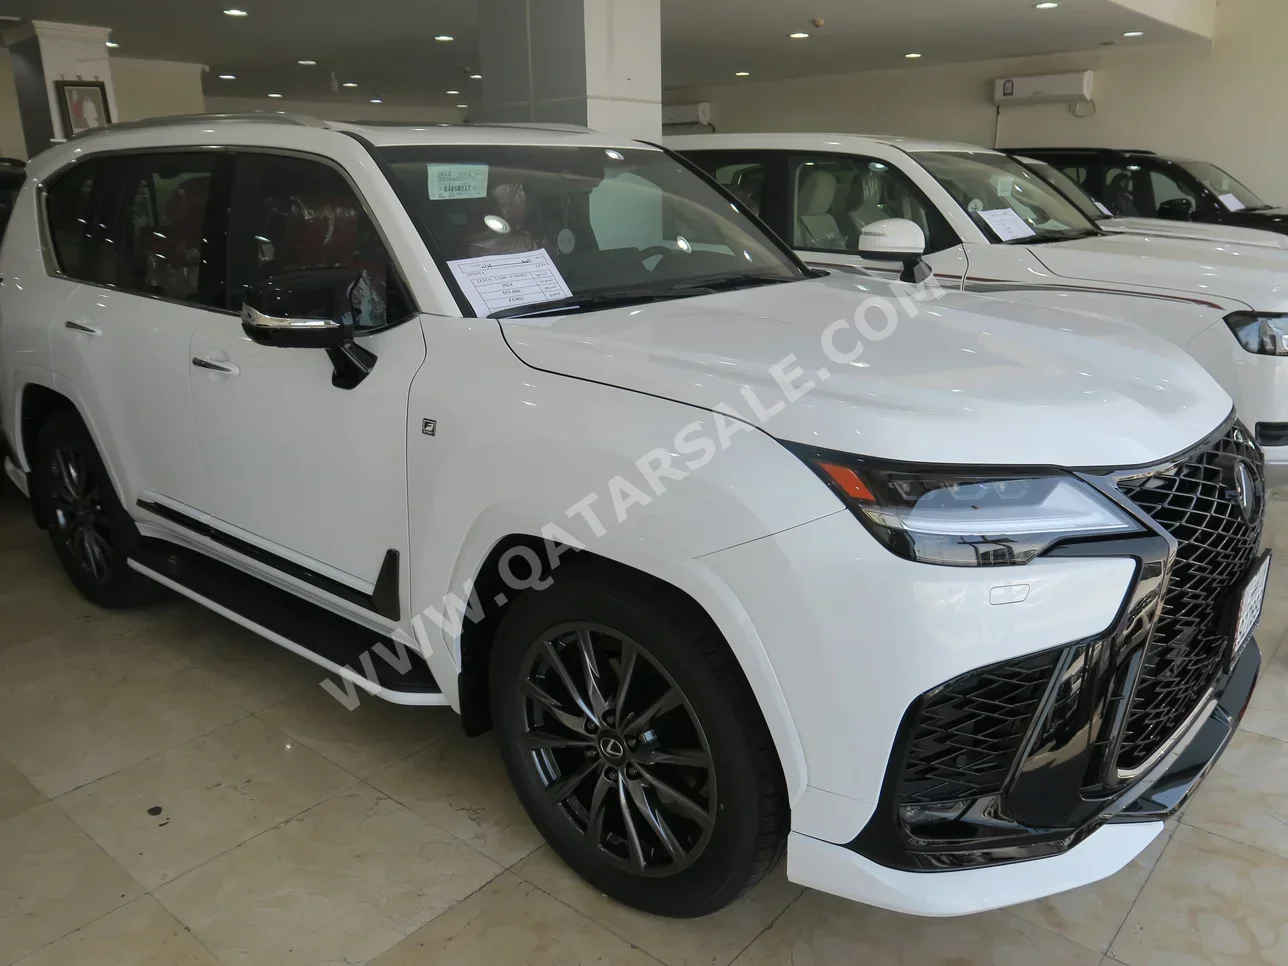  Lexus  LX  600 F Sport  2024  Automatic  0 Km  6 Cylinder  Four Wheel Drive (4WD)  SUV  White  With Warranty